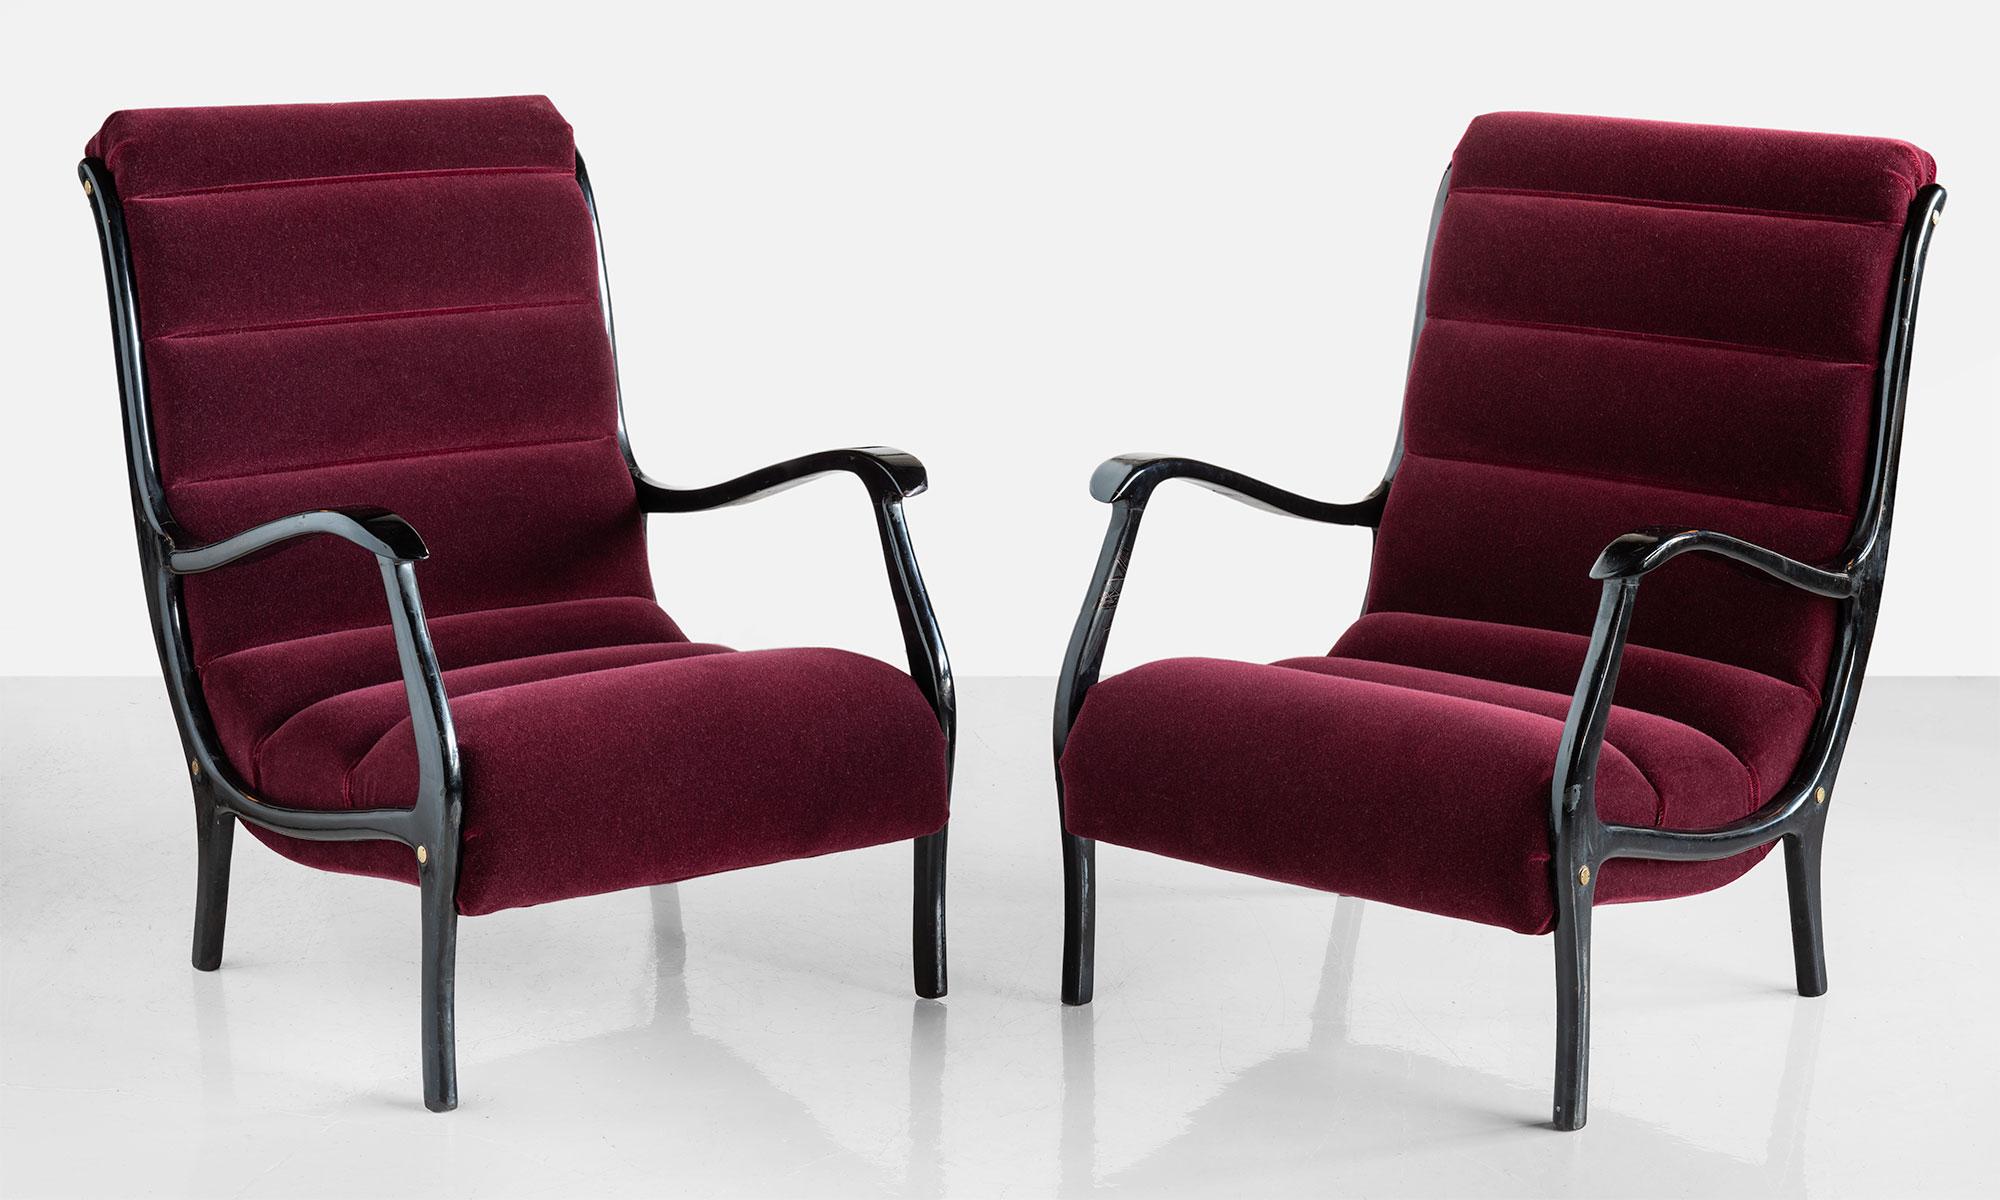 Pair of Ezio Longhi bentwood armchairs, Italy, circa 1960.

Designed by Ezio Longhi for Elam. Newly upholstered in Maharam Alpaca velvet.

